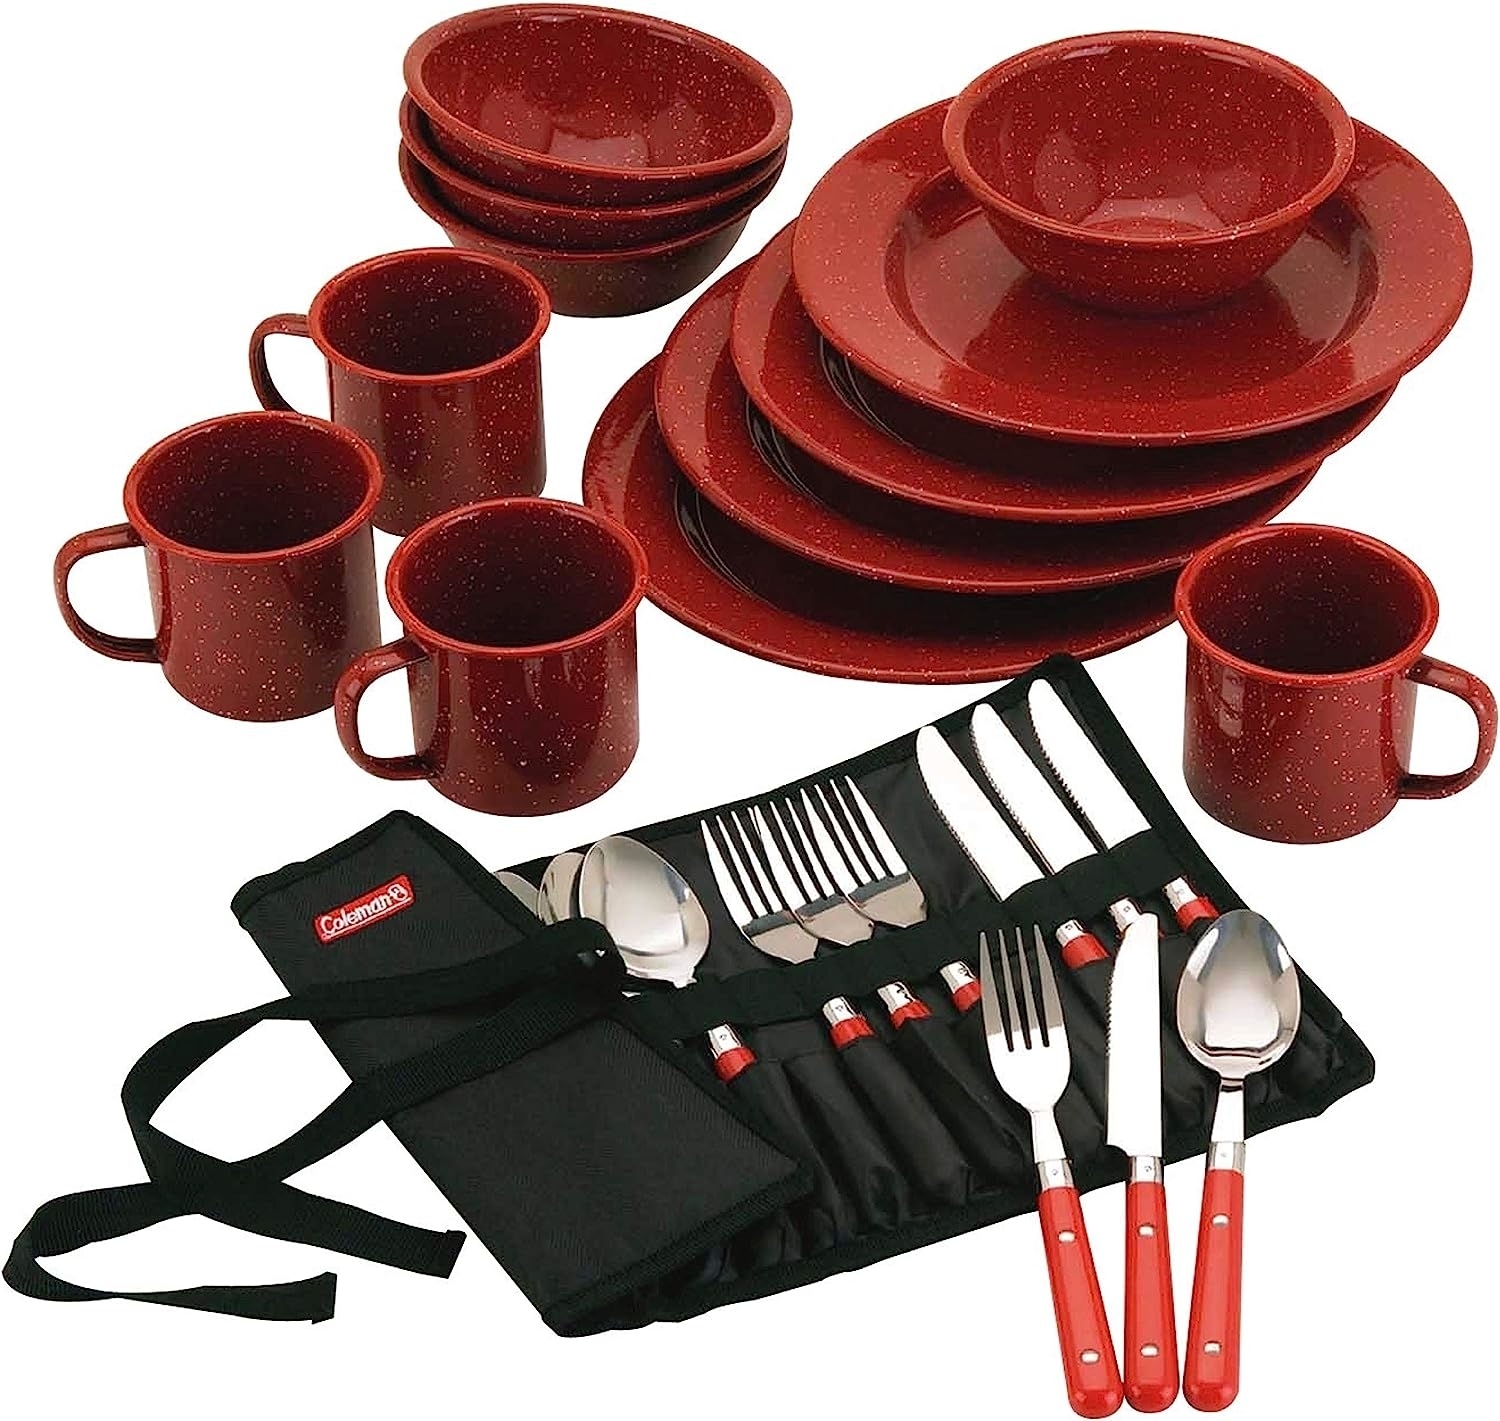 the 24-piece dinnerware set